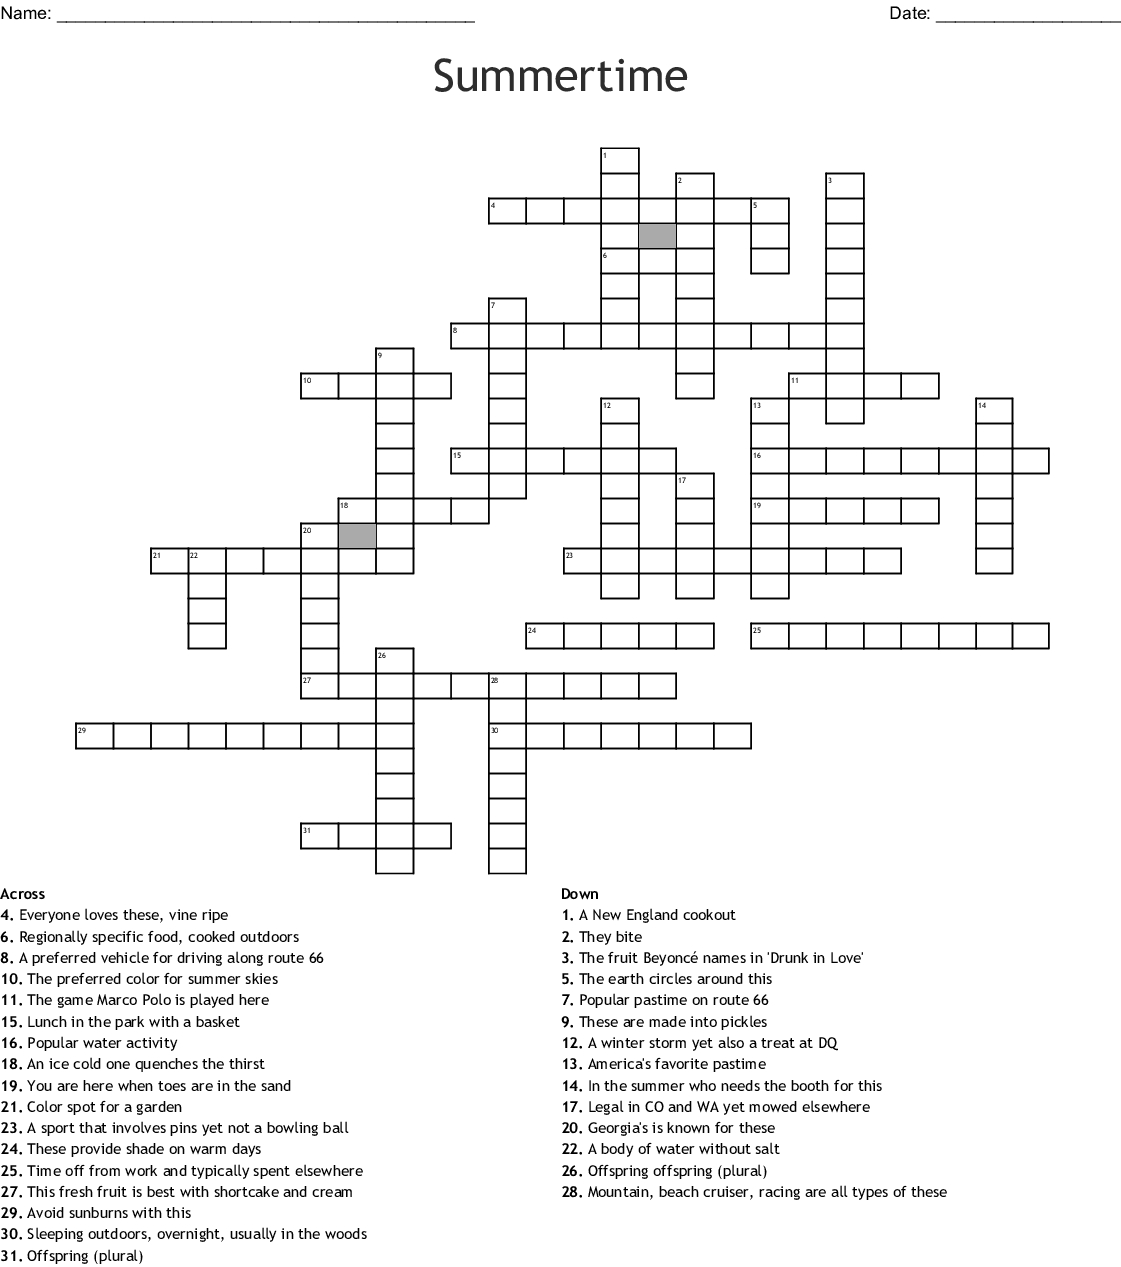 Summertime Crossword - Wordmint - Summer Crossword Puzzle Free Printable